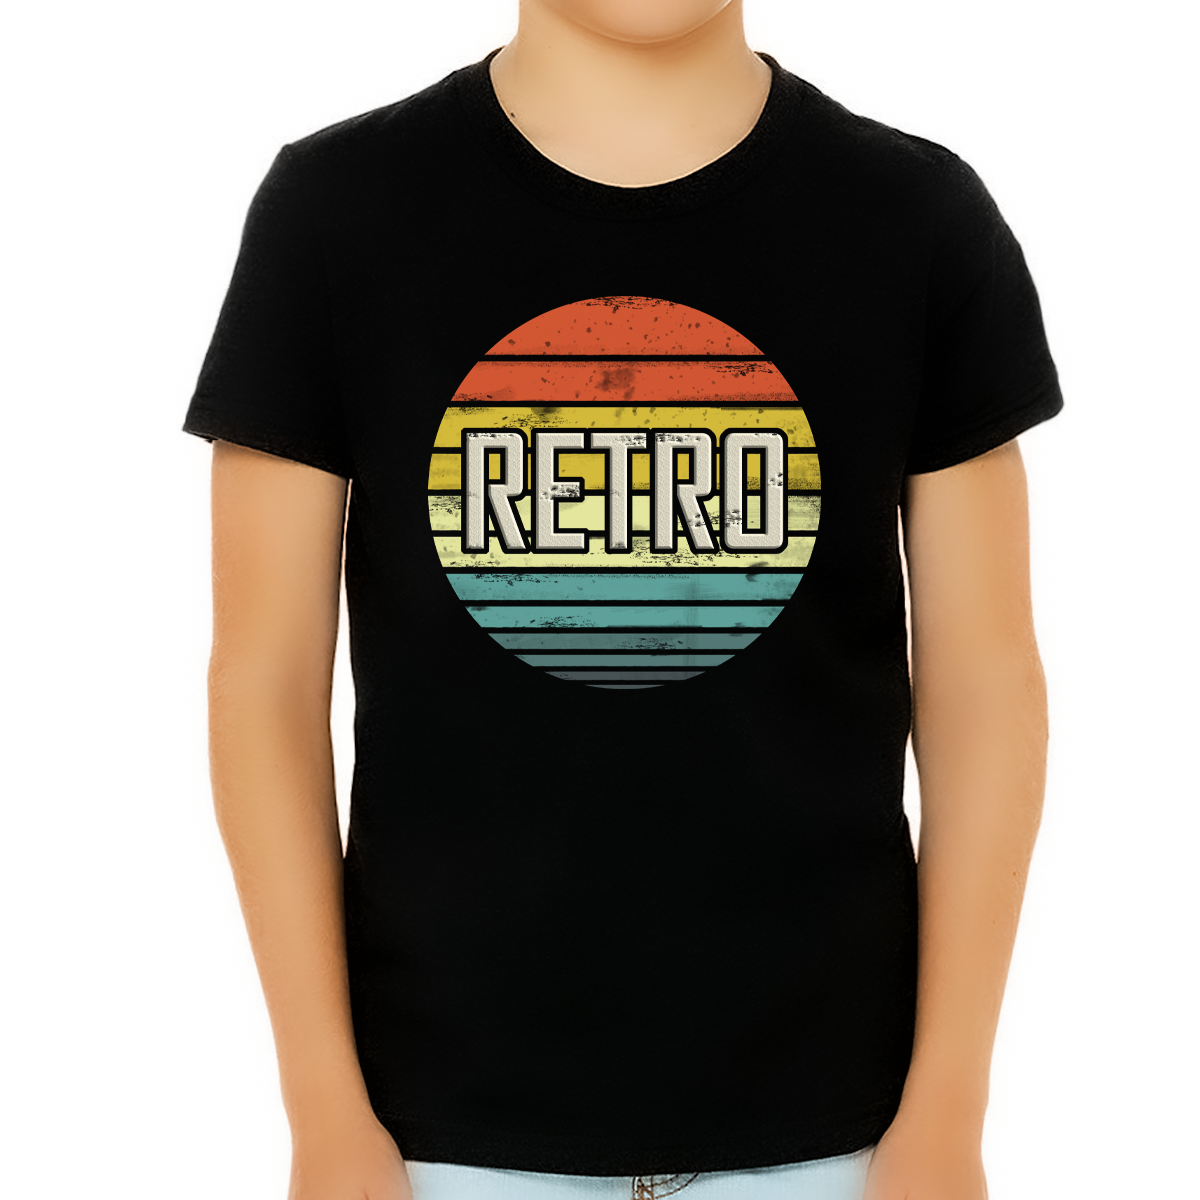 Retro Vintage Tees for Boys Retro Clothes Vintage T Shirts Retro Shirts for Boys Graphic Tees Vintage - Fire Fit Designs